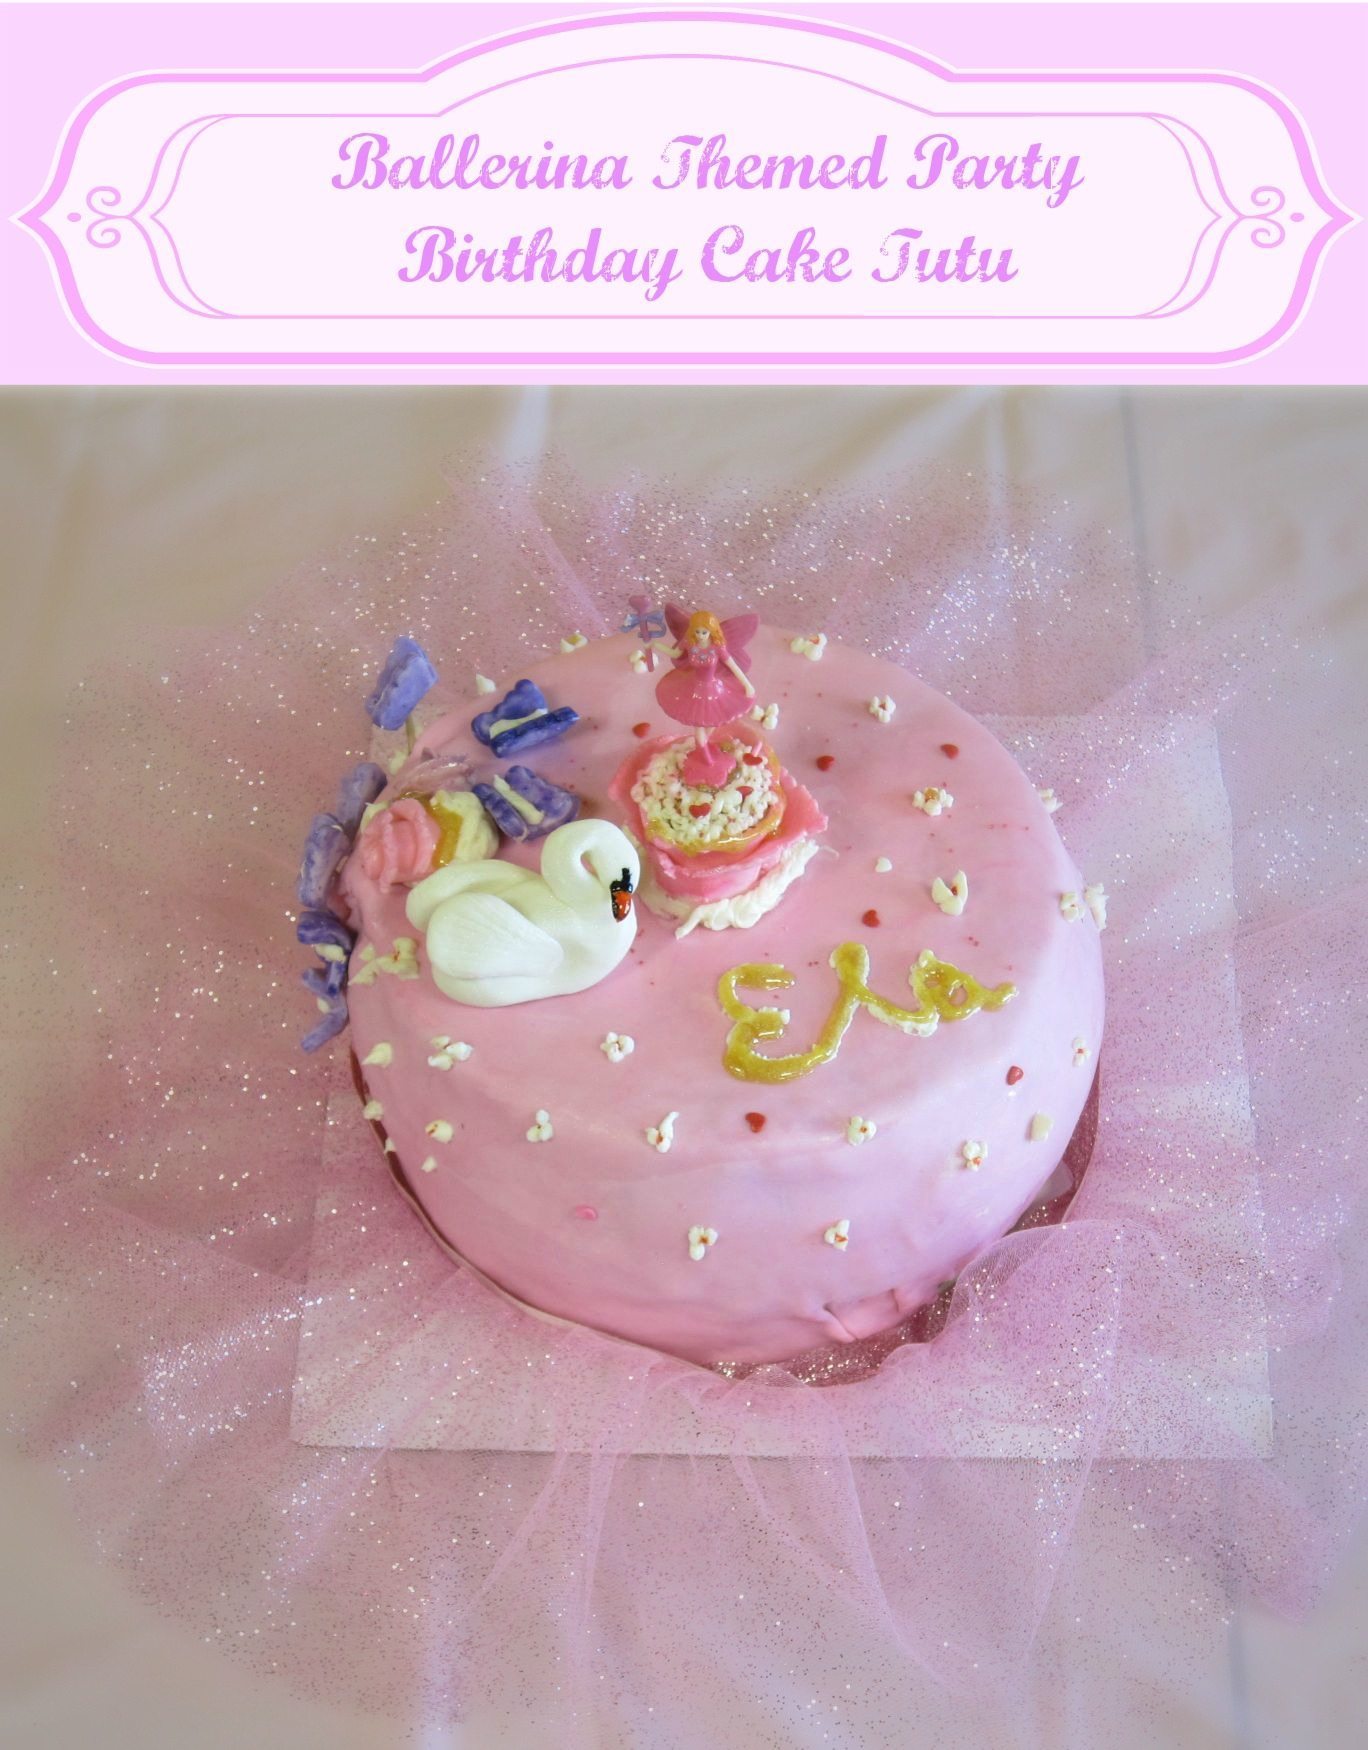 Cake Tutu for Ballerina themed birthday party